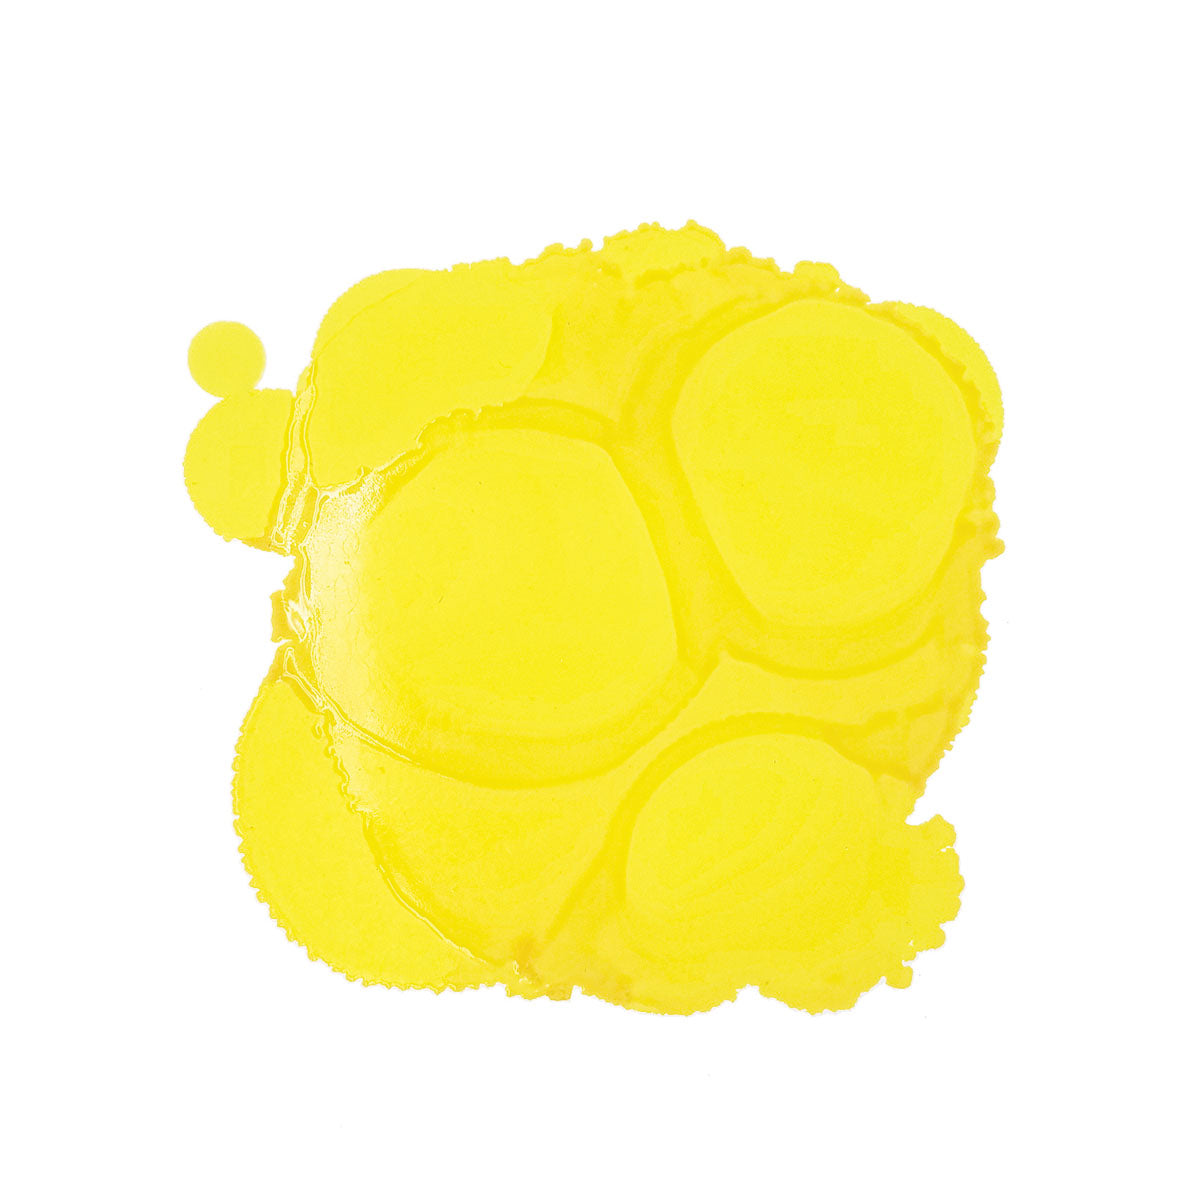 Jacquard - Pinata Alcohol Inks 1-2oz 15ml - Sunburst Yellow 002